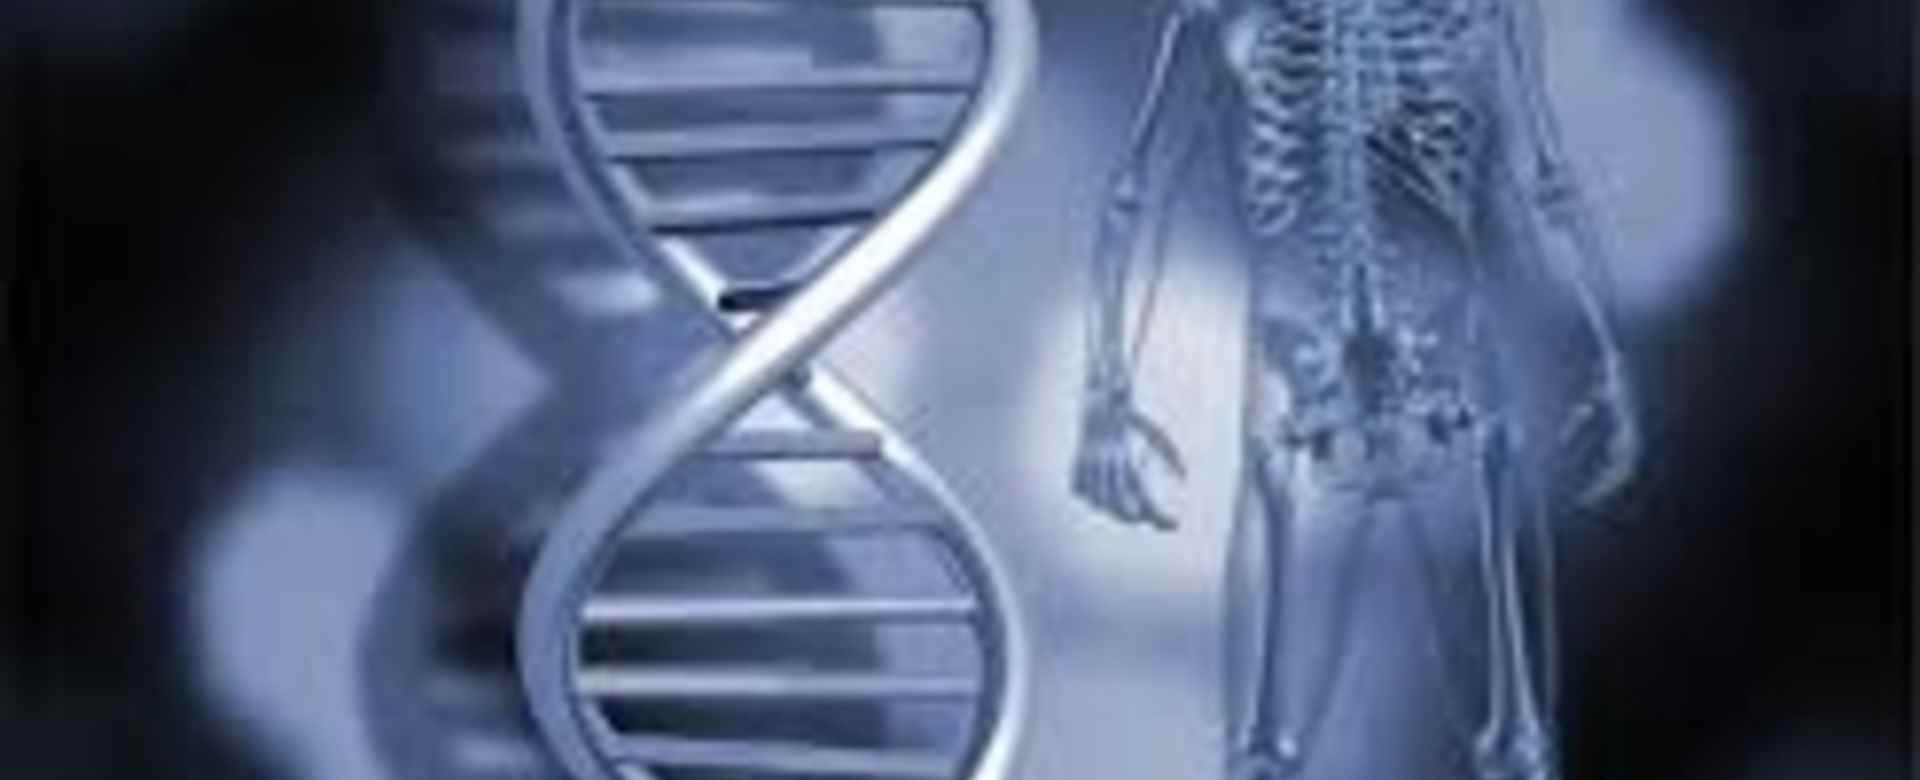 IMRs Ensure Patients Receive Objective Decisions Regarding Genetic Testing